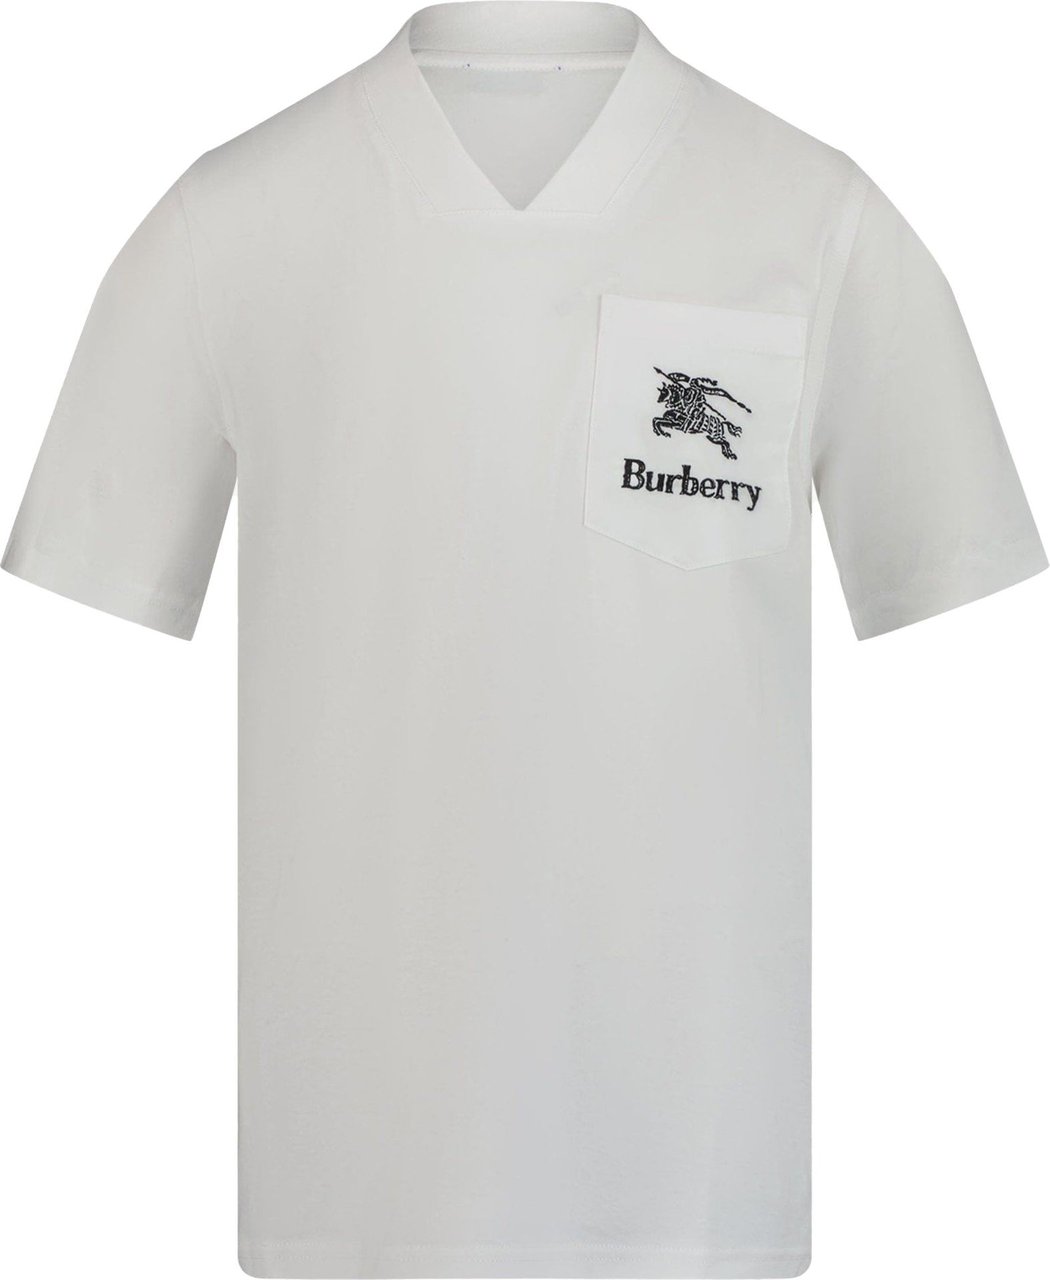 Burberry Burberry Kinder Jongens T Shirt Wit Wit